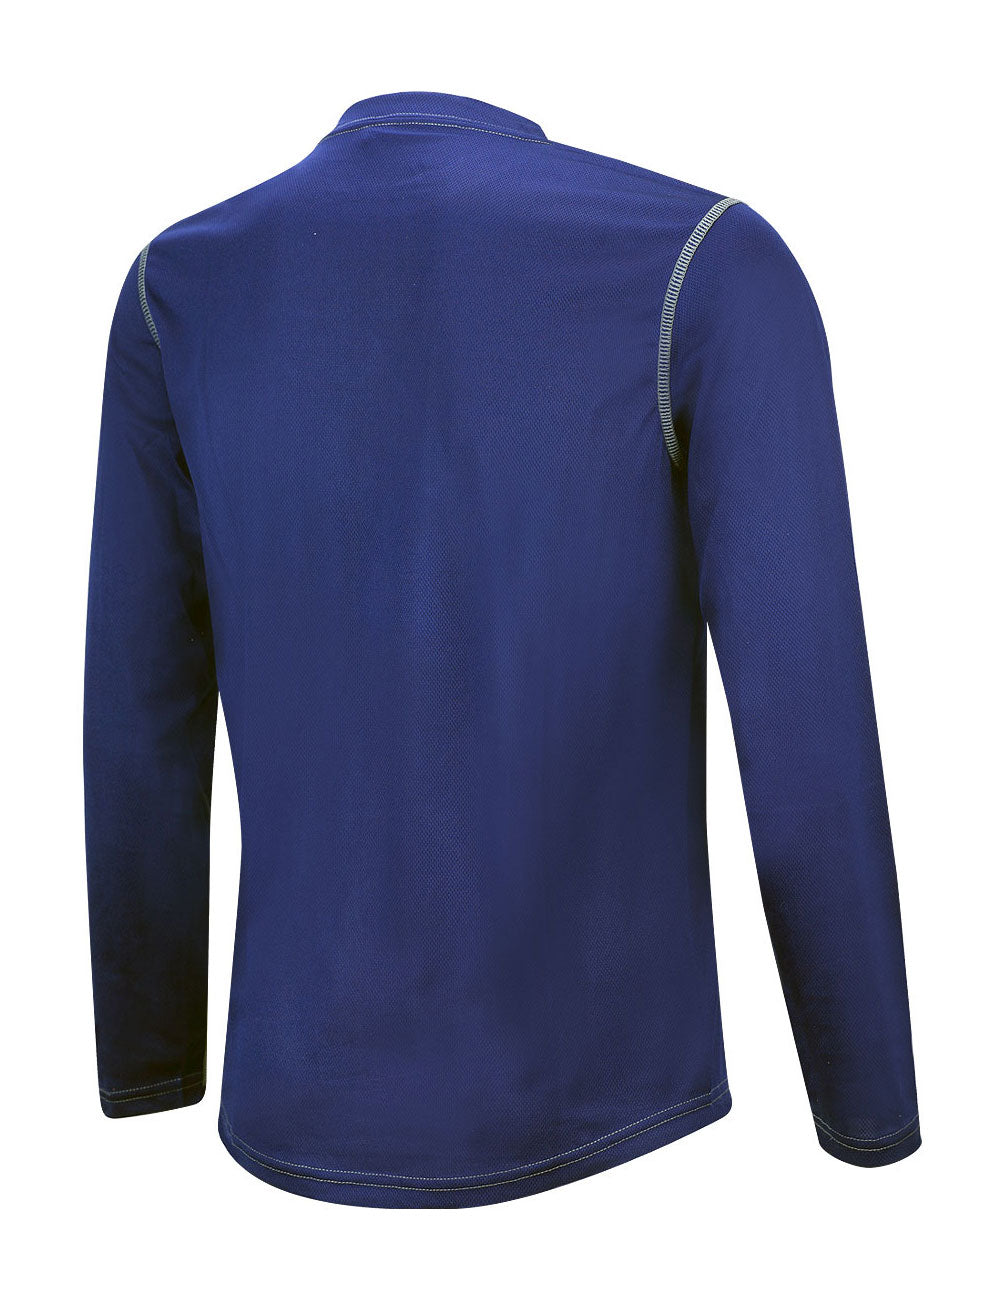 laufshirt-fahrradtrikot-running-t-shirt-kompression-pro-air-blau-schwarz-herren-damen-kurzarm-langarm-xs-s-m-l-xl-xxl-xxxl-long-back